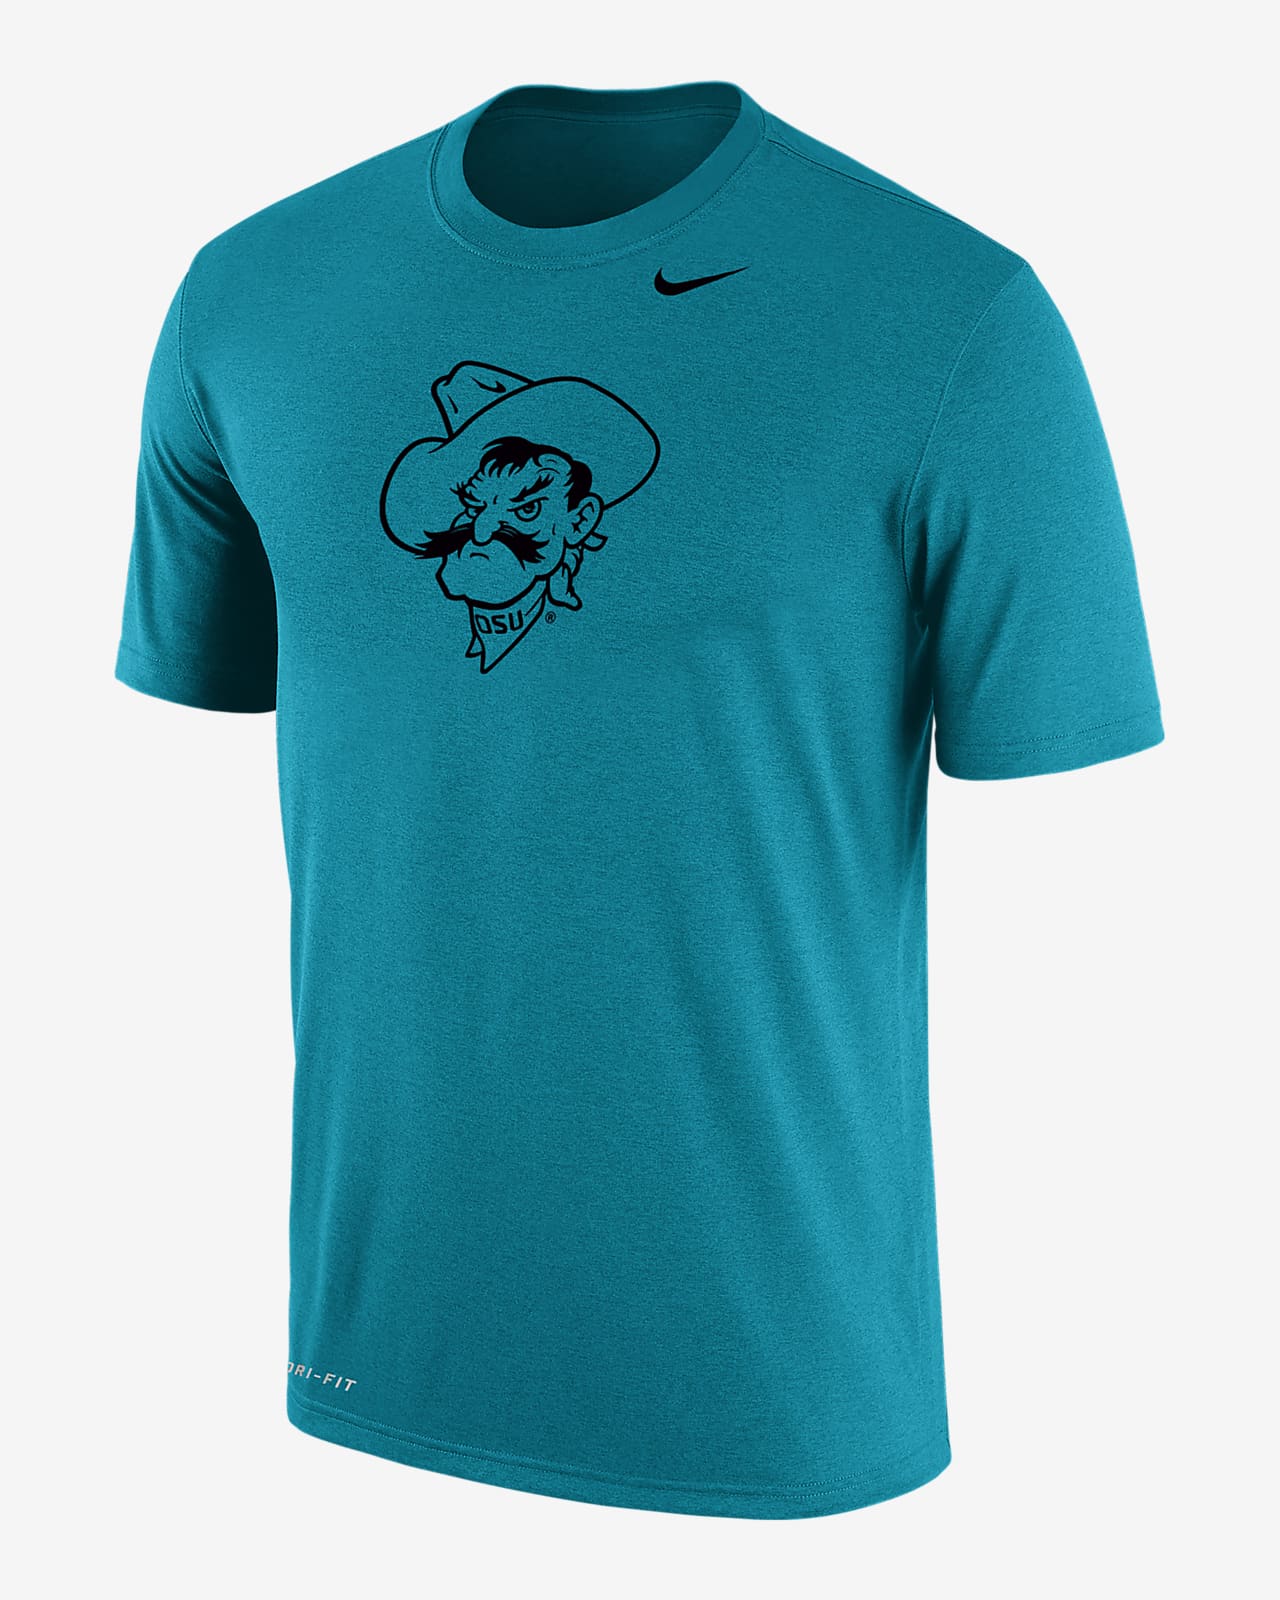 Oklahoma State Men's Nike Dri-FIT College T-Shirt